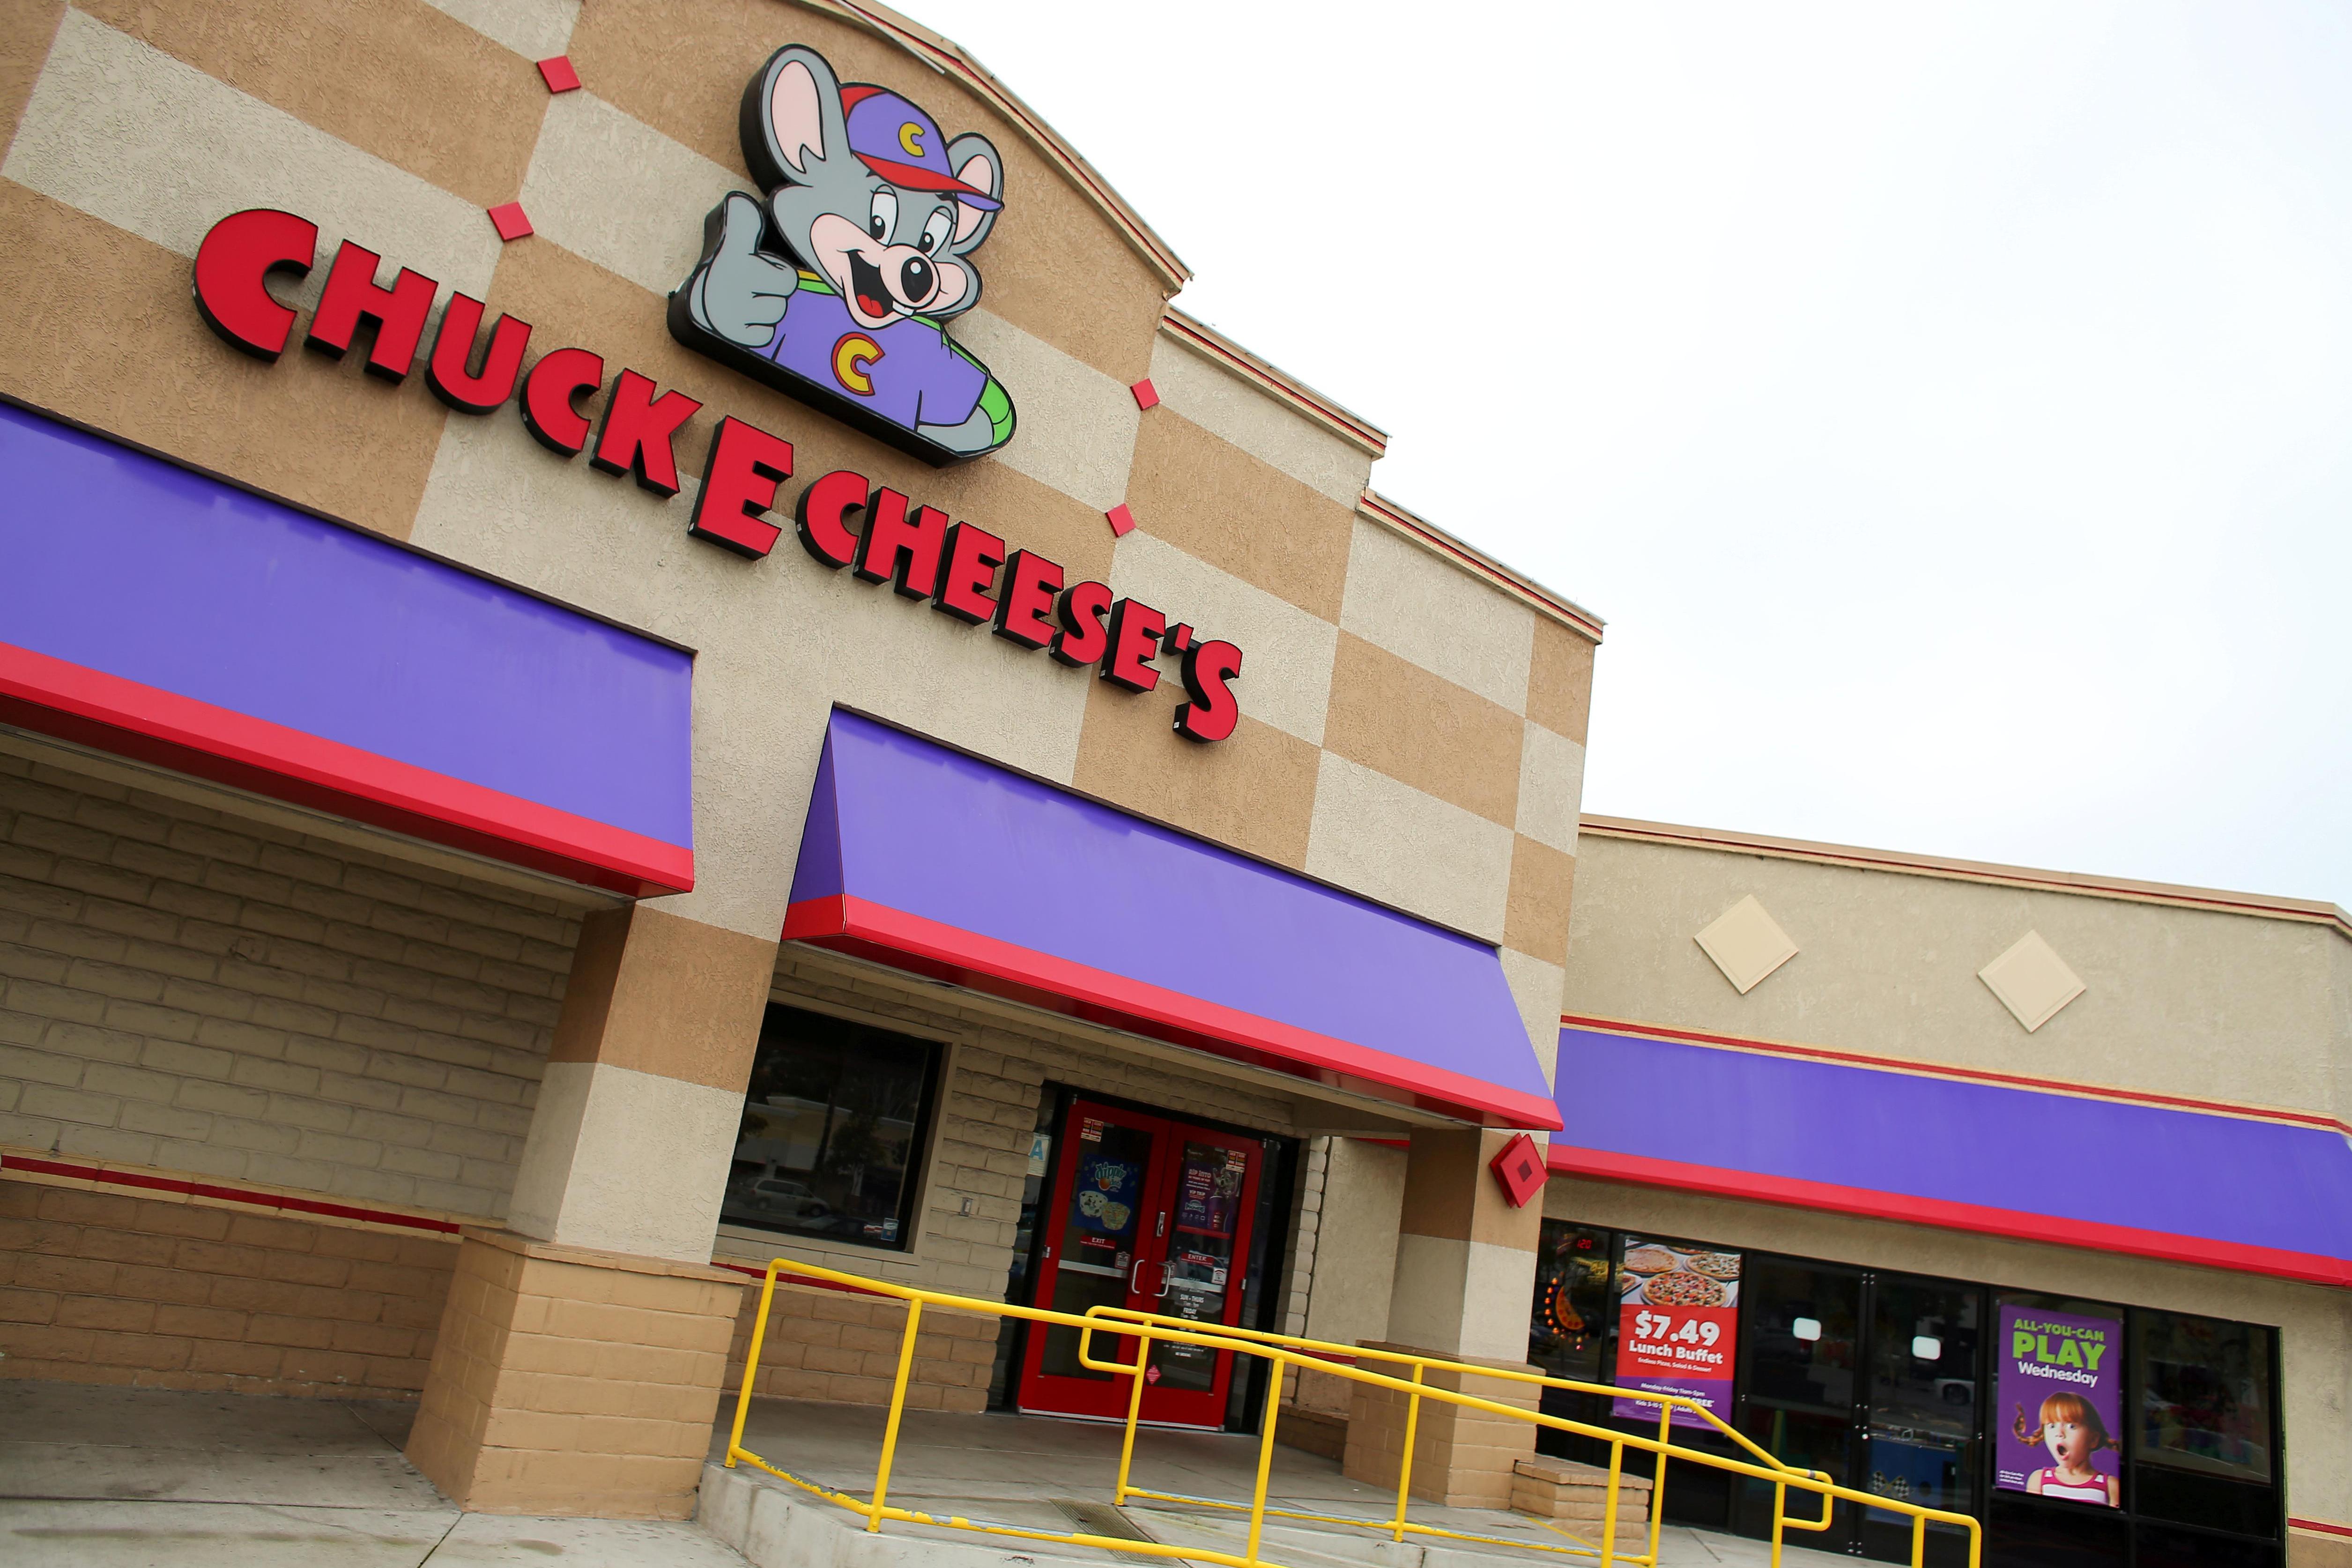 . food chain Chuck E. Cheese to expand in Saudi Arabia